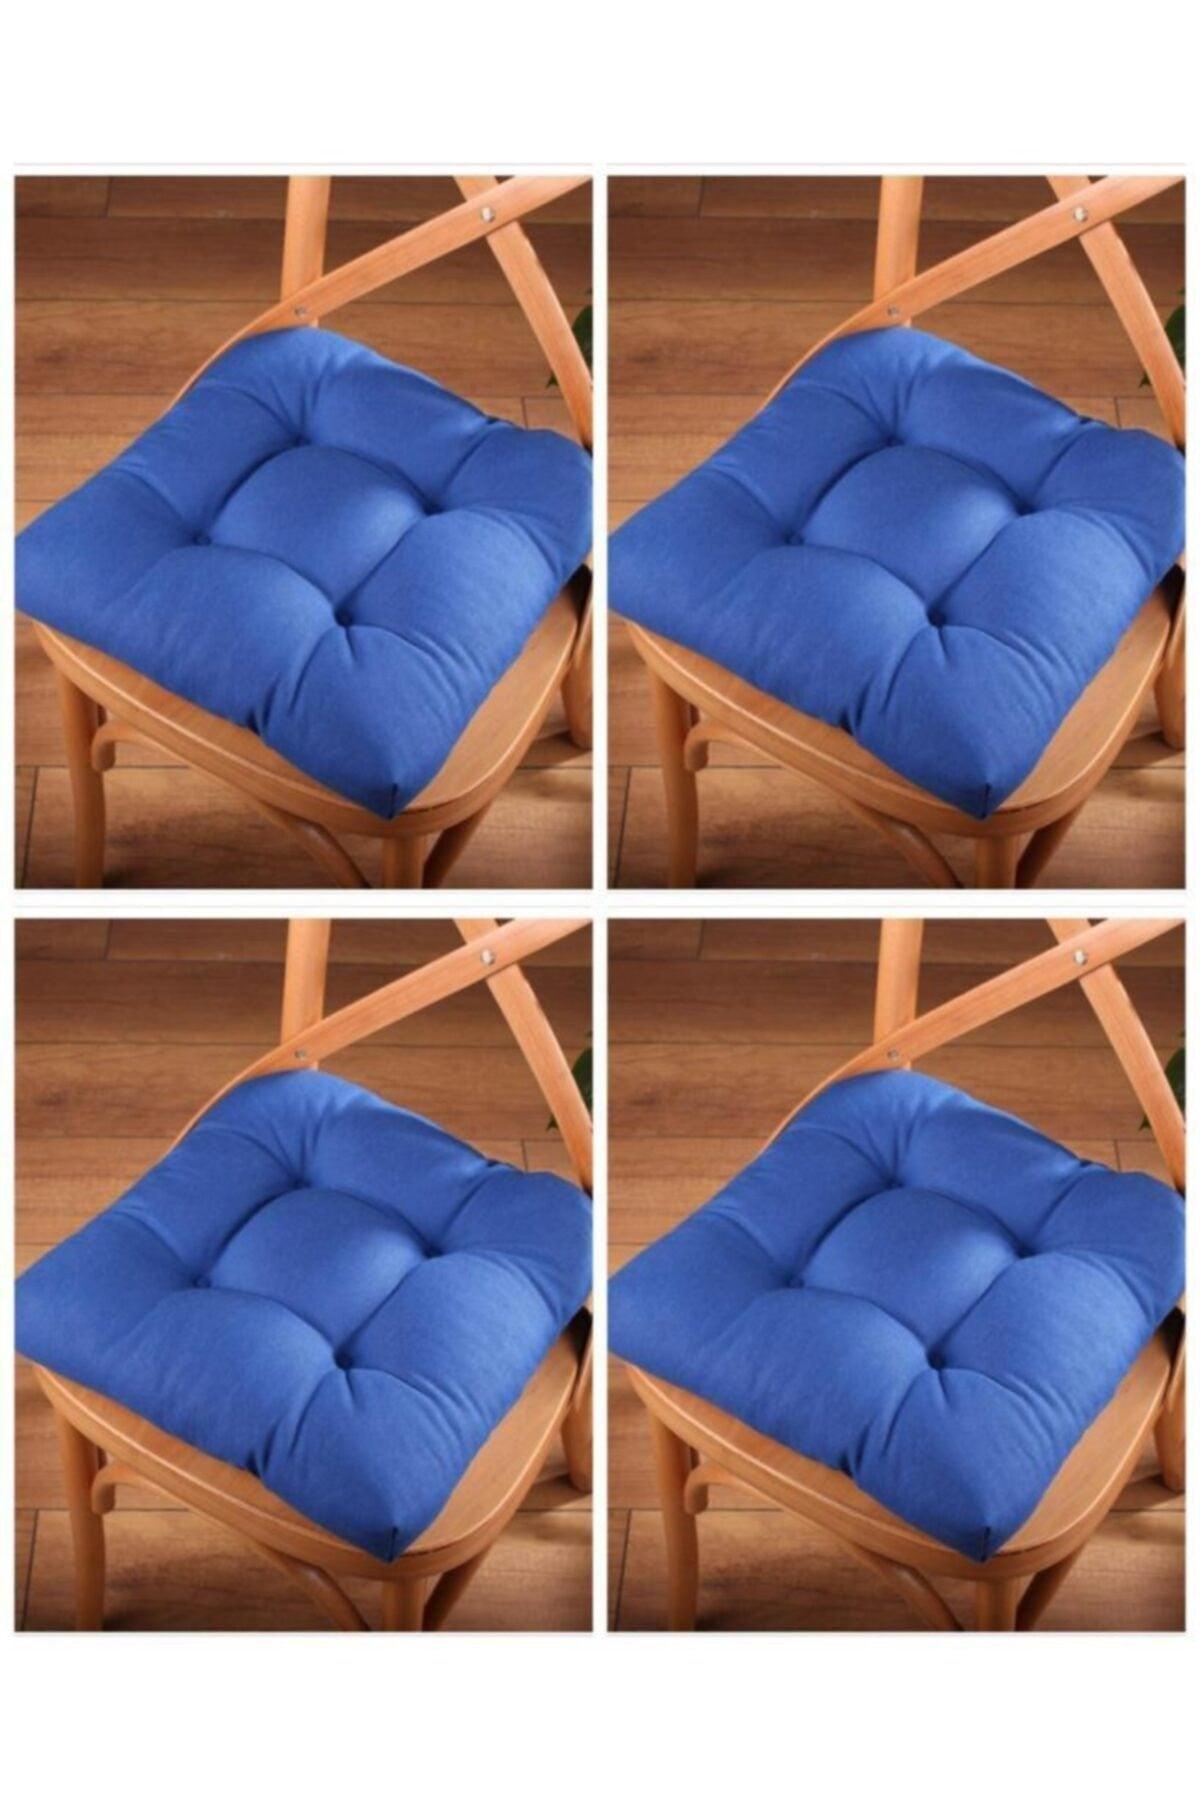 4 Lux Pofidik Navy Blue Chair Cushion